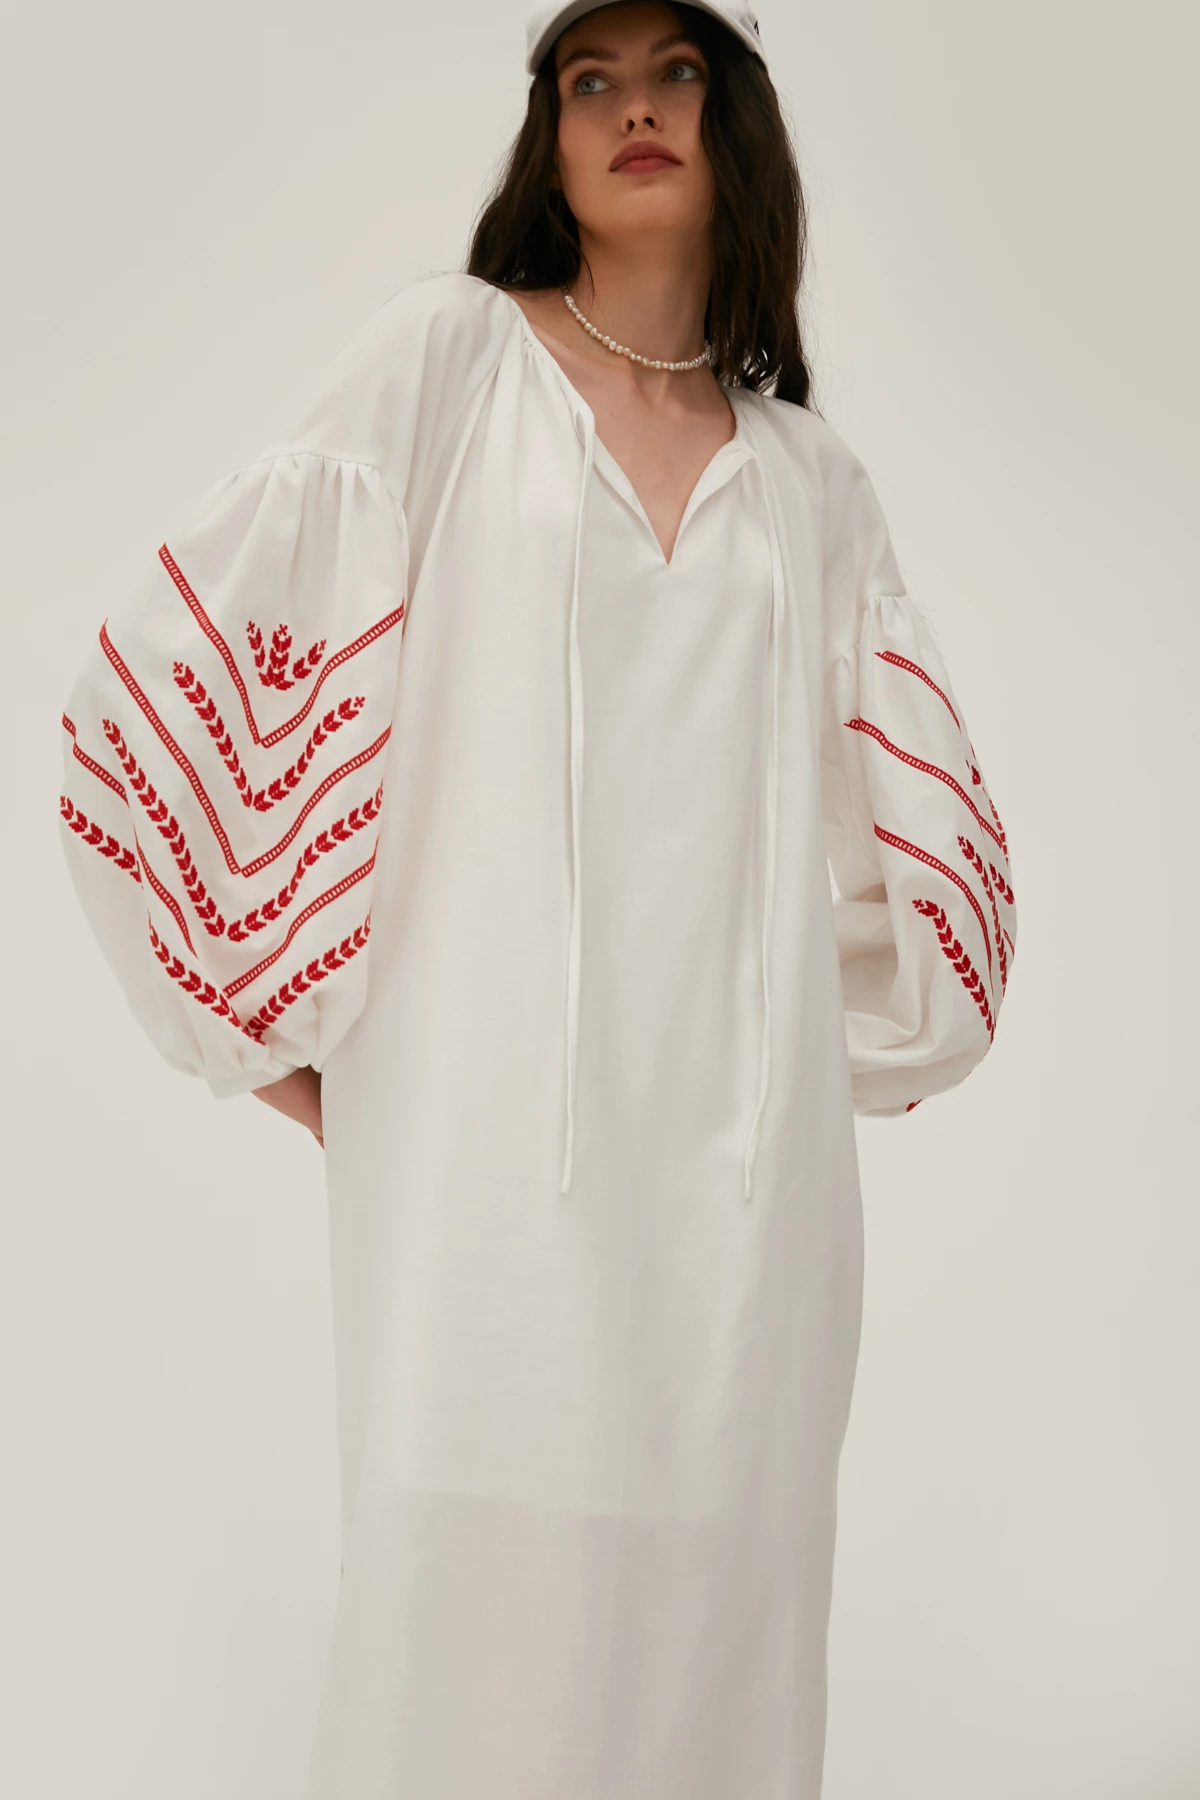 Milky linen vyshyvanka dress with wheat embroidery, photo 2